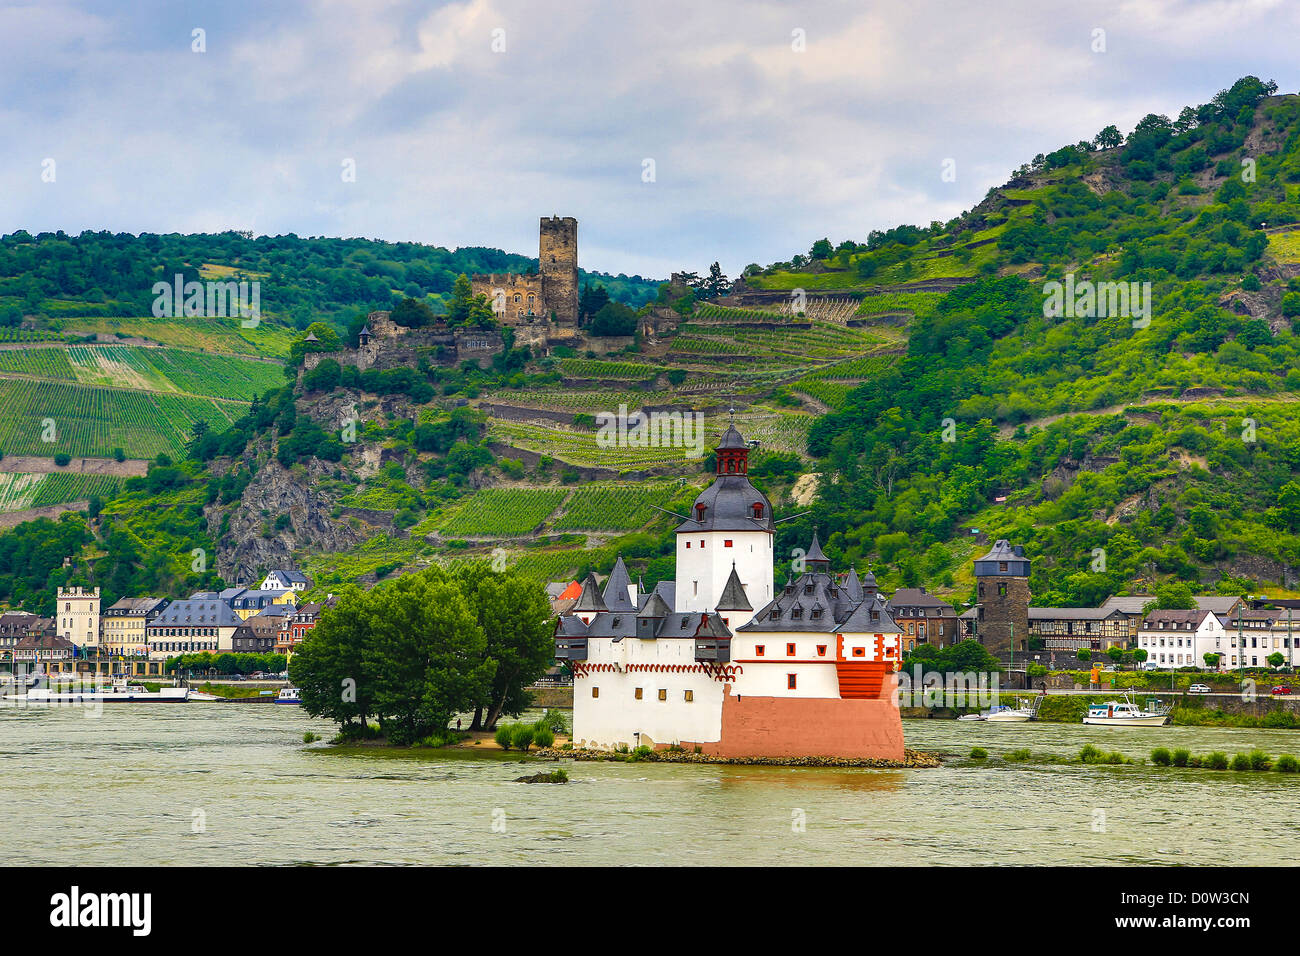 Germany, Europe, travel, Rhein, Rhine, valley, river, Pfalz bei Kaub, castle, Gutenfels, Pfalz, agriculture, bend, Rhine, ship, Stock Photo